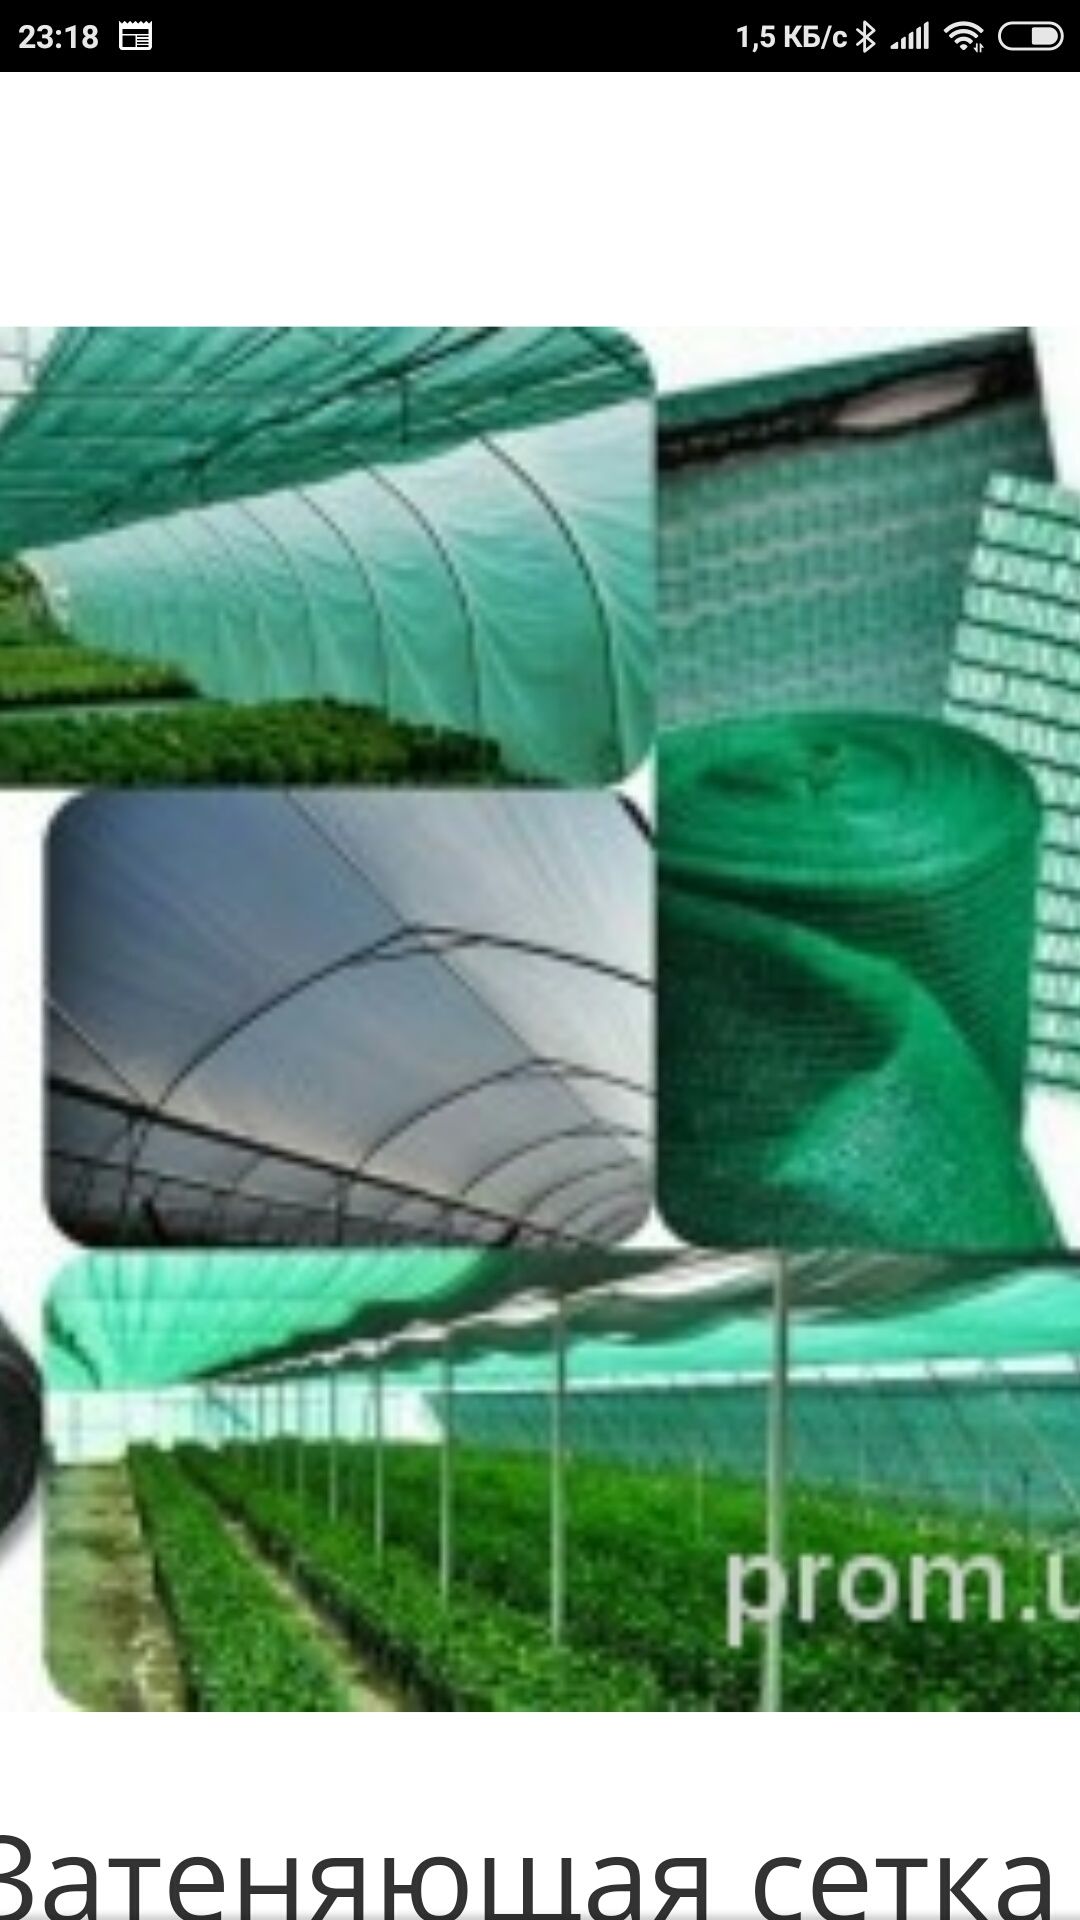 Установка солнце защитной сеткой и установка микроклимата